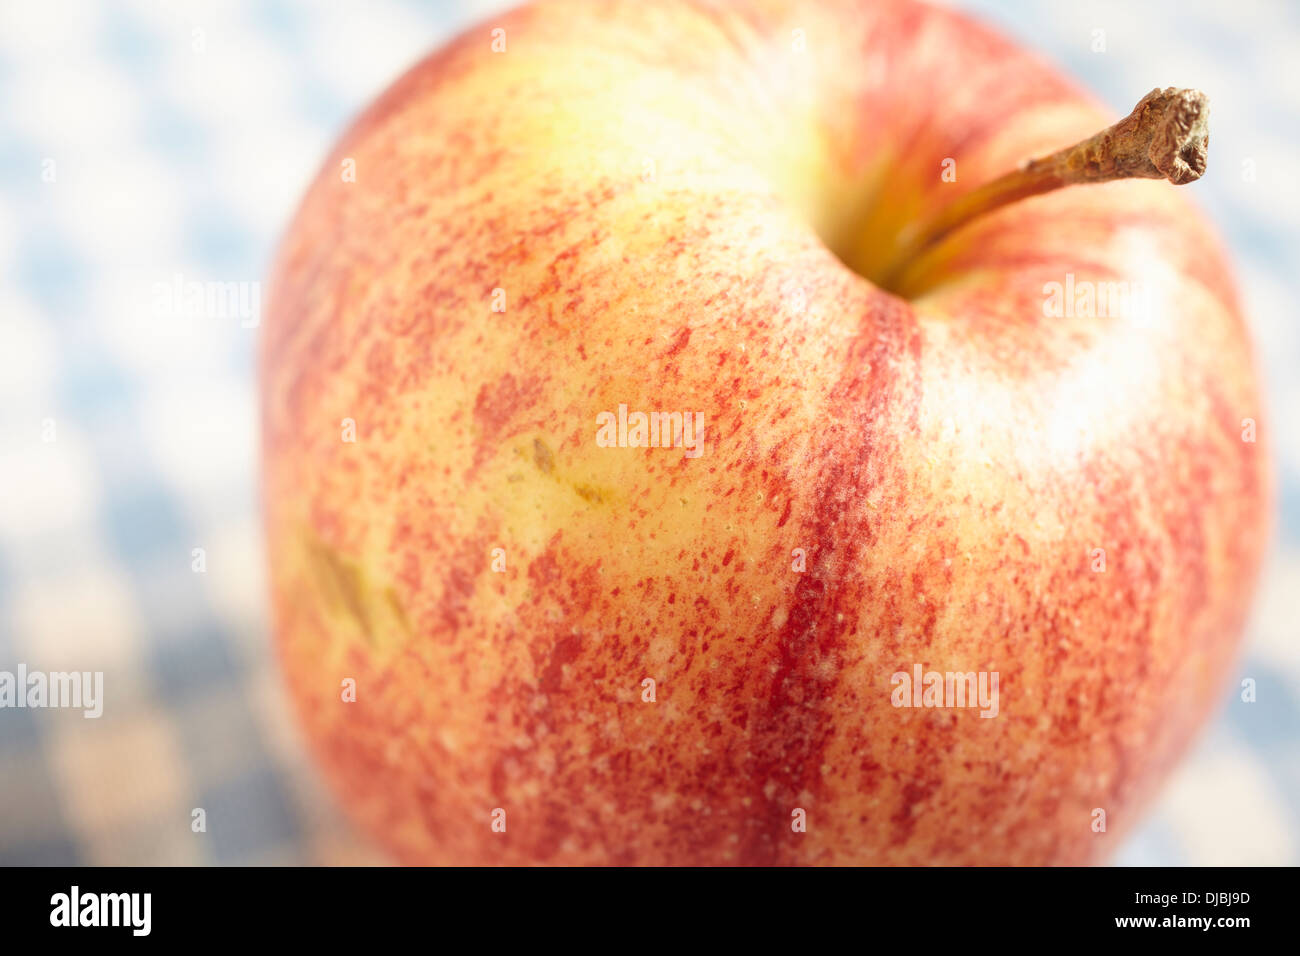 https://c8.alamy.com/comp/DJBJ9D/organic-gala-apple-DJBJ9D.jpg